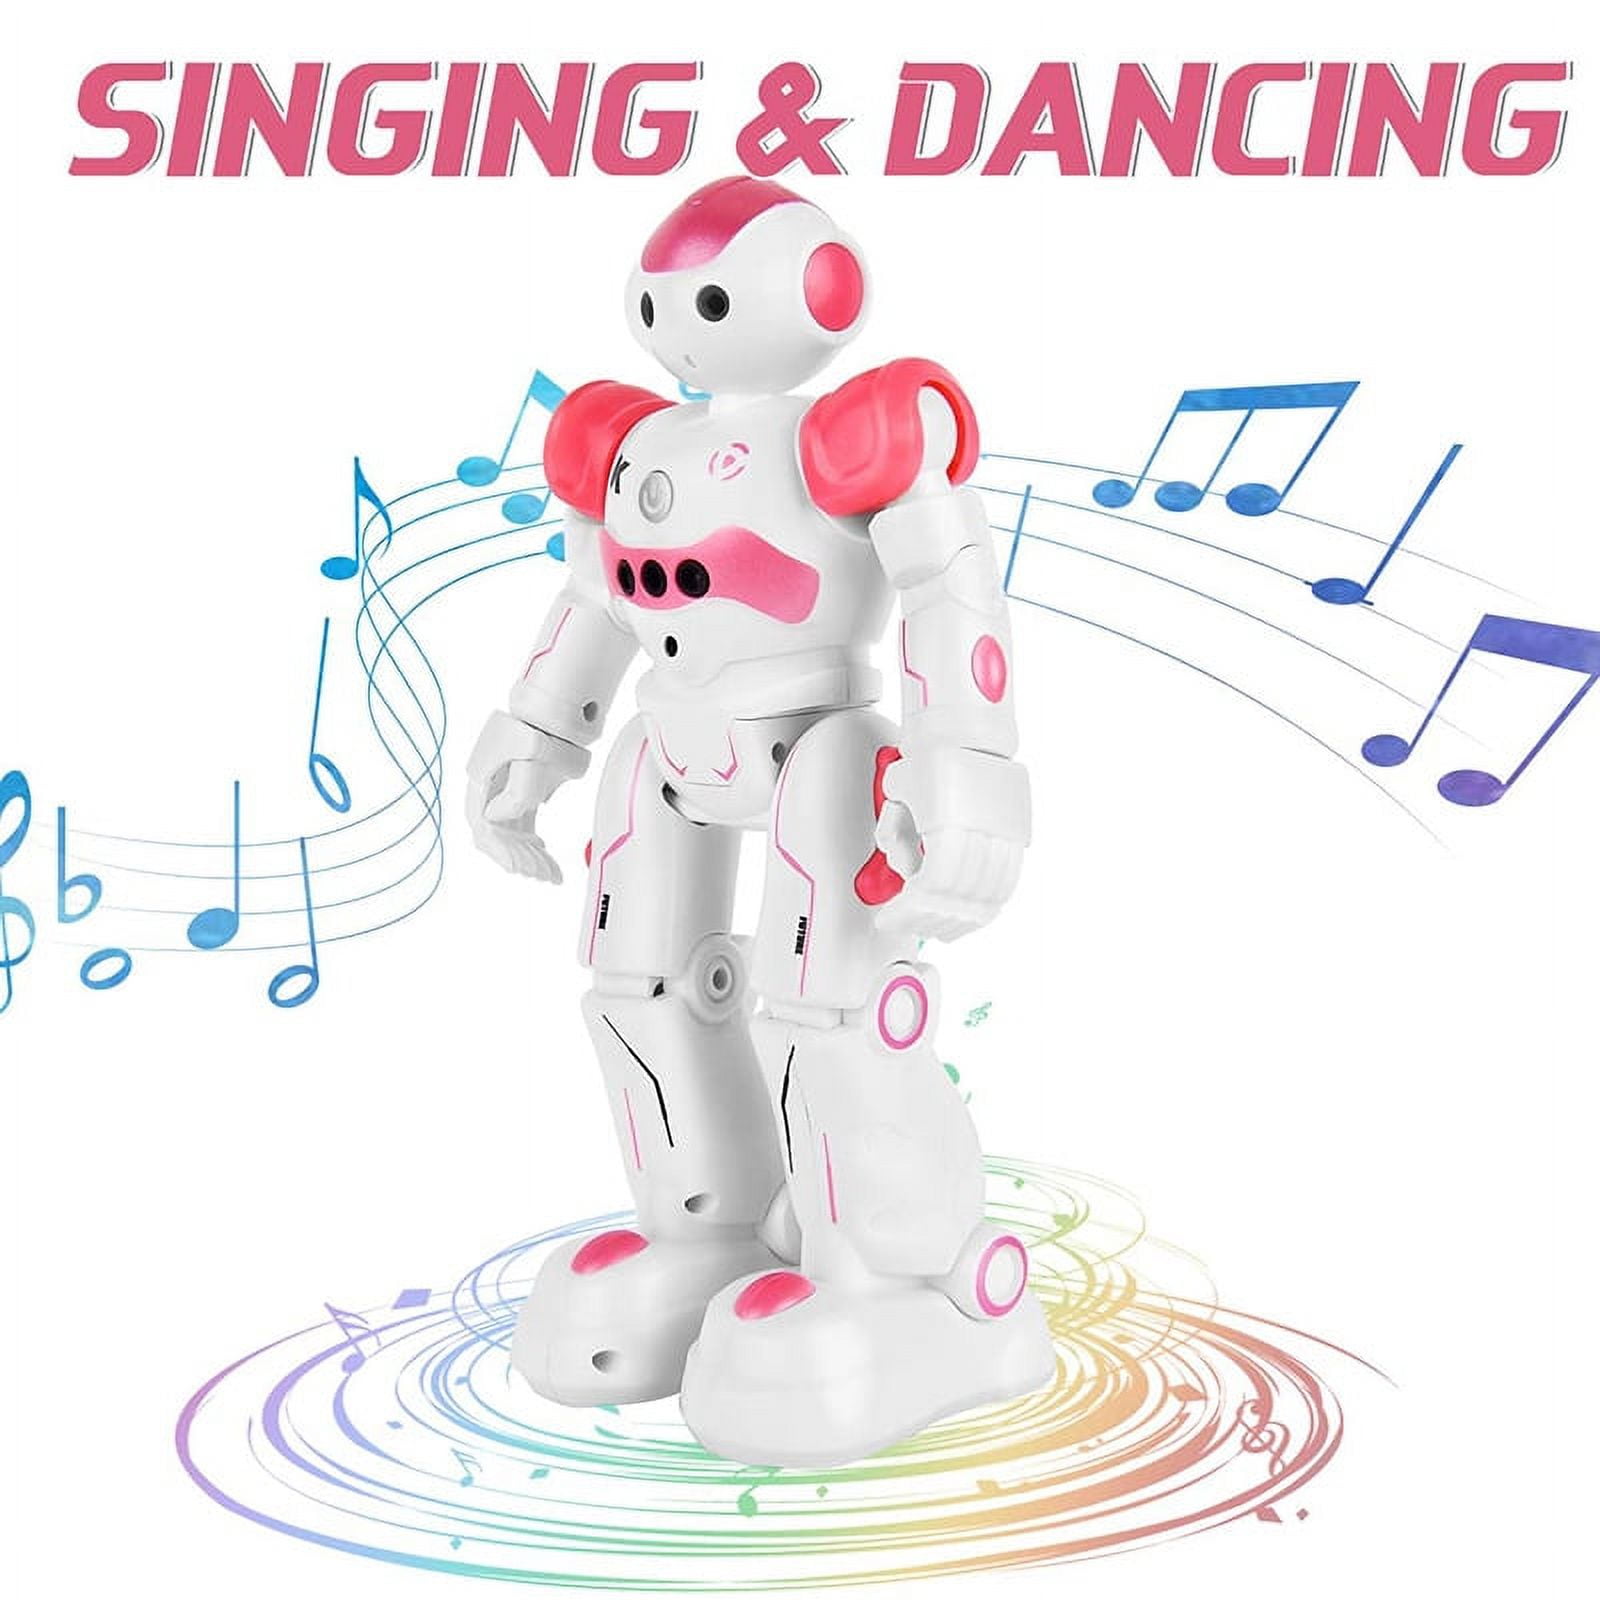 RC Smart Robot Toy for Kids, Remote Control Intelligent Educational  Programmable, Walking Dancing Gesture Sensor Gift 